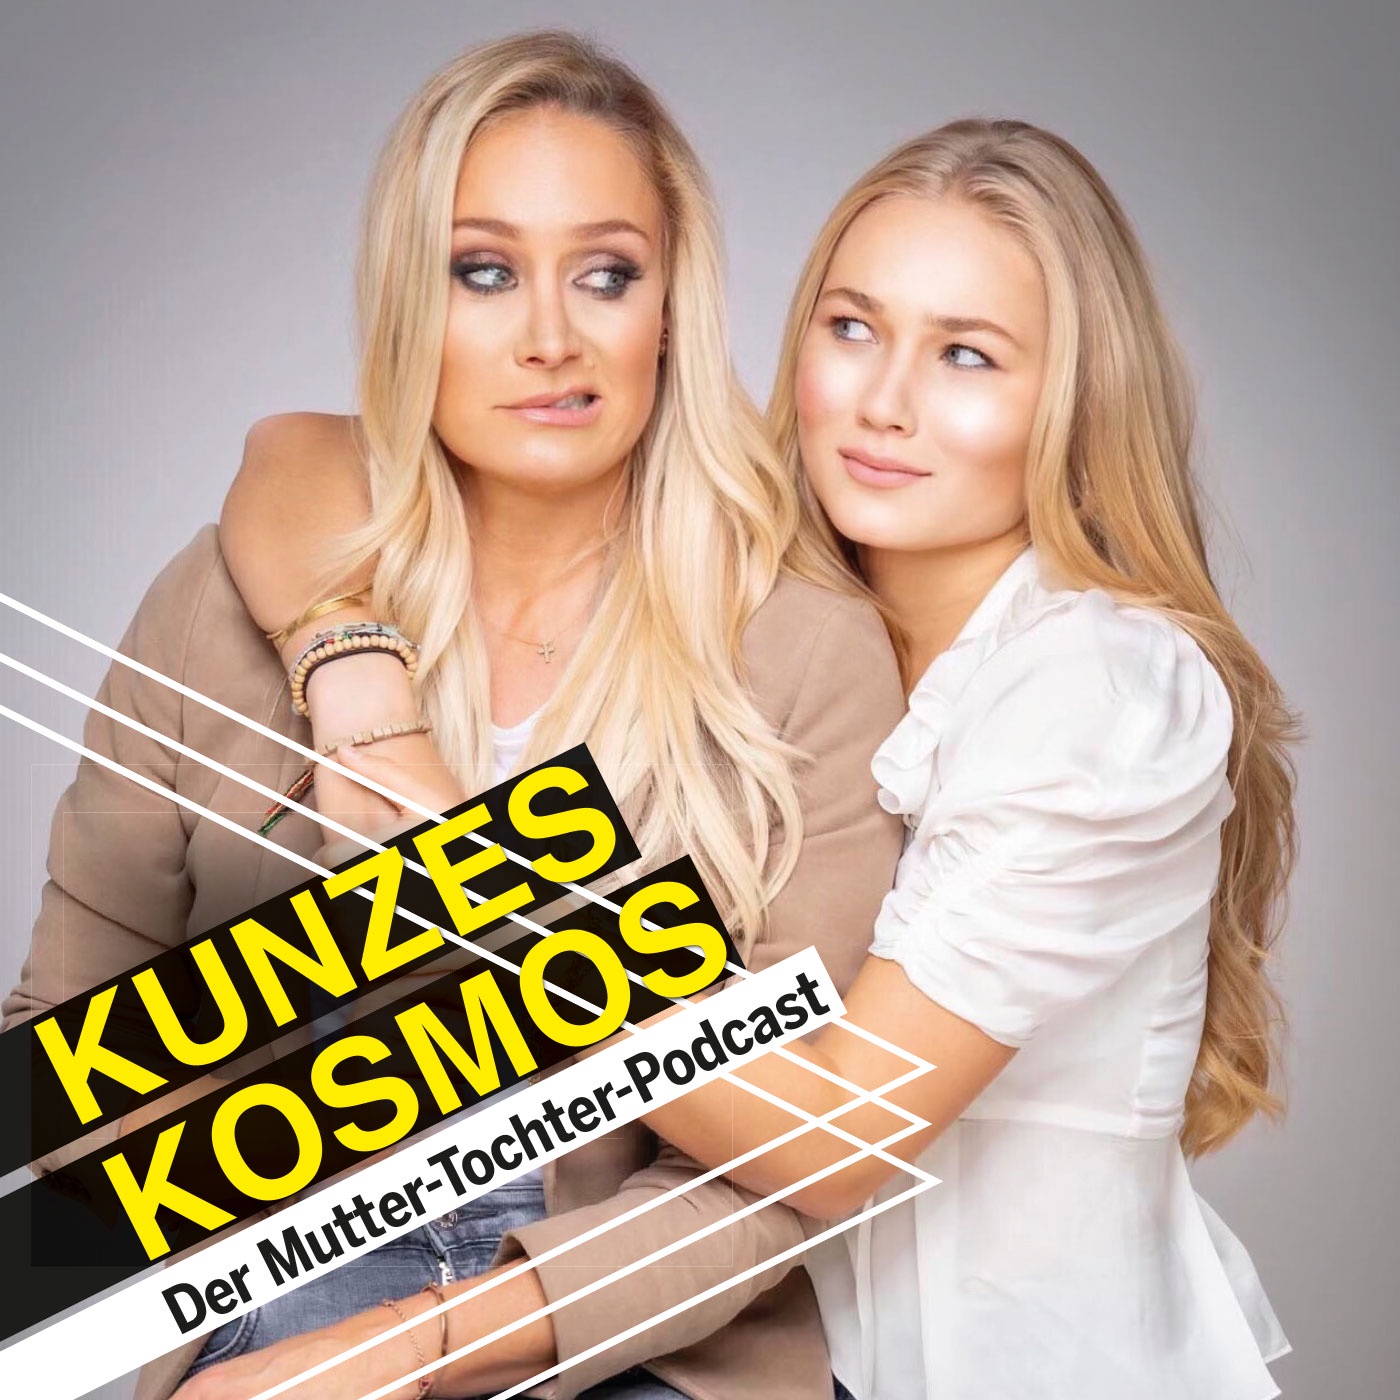 KUNZES KOSMOS. Der Mutter-Tochter Podcast.